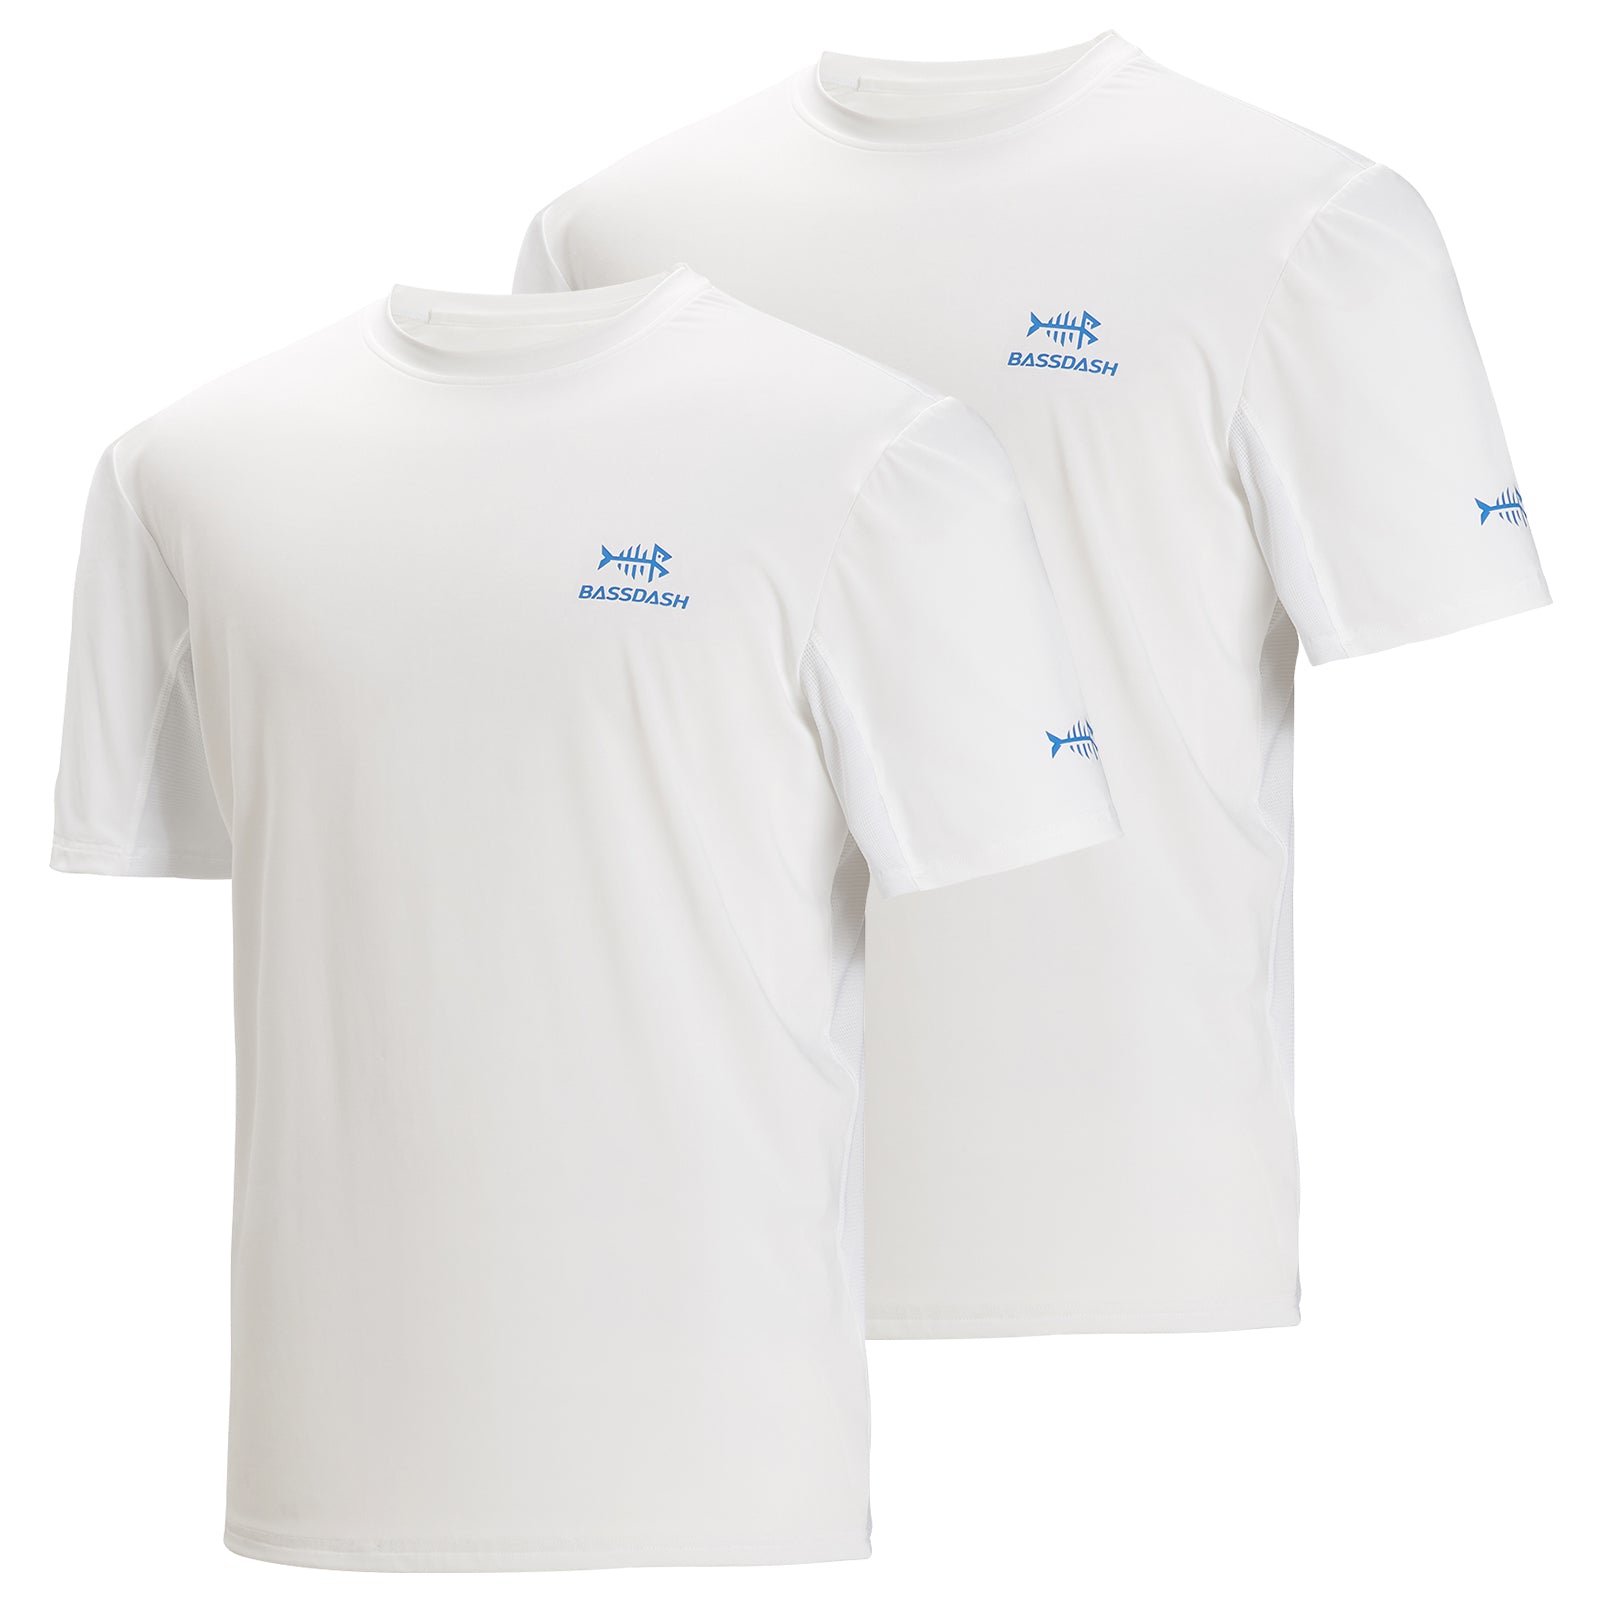 Bassdash Men\'s Shirt Performance T-Shirt Fishing Sleeve Quick Dry UPF Short Active 50